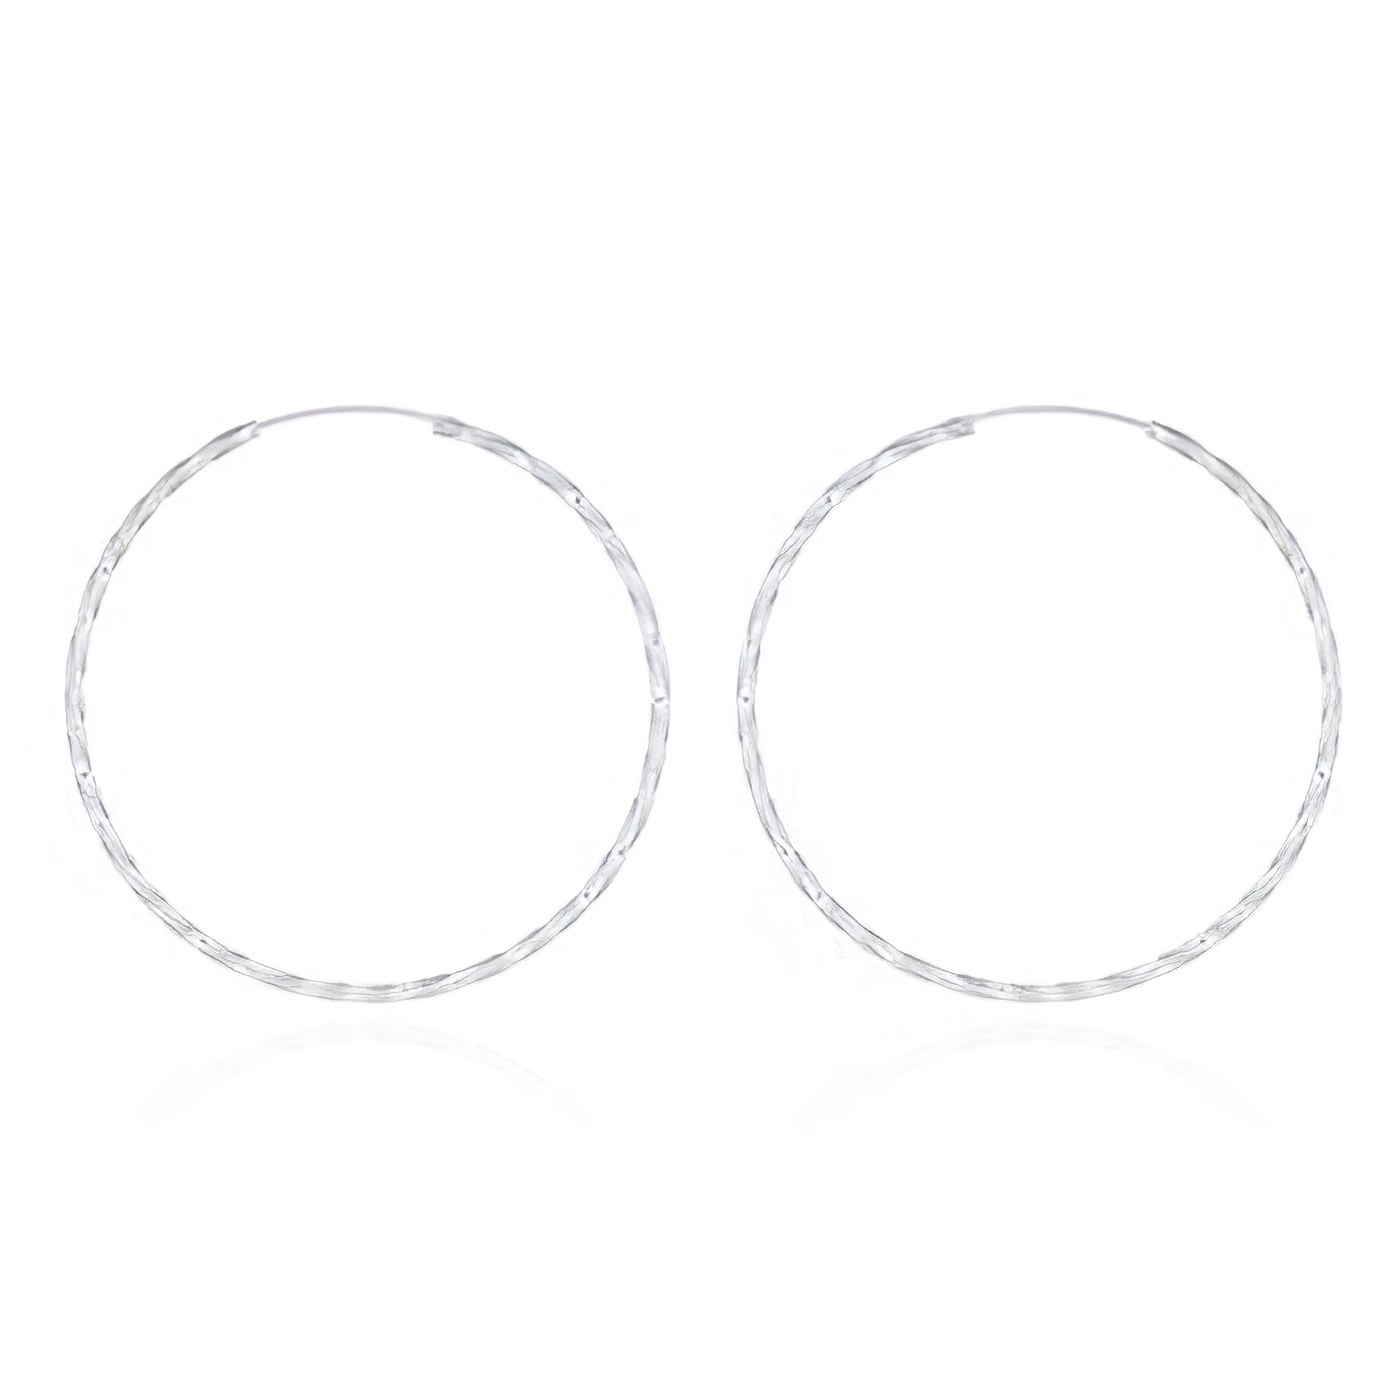 58 mm Sterling Twisted Silver Wire Hoop Earrings by BeYindi 